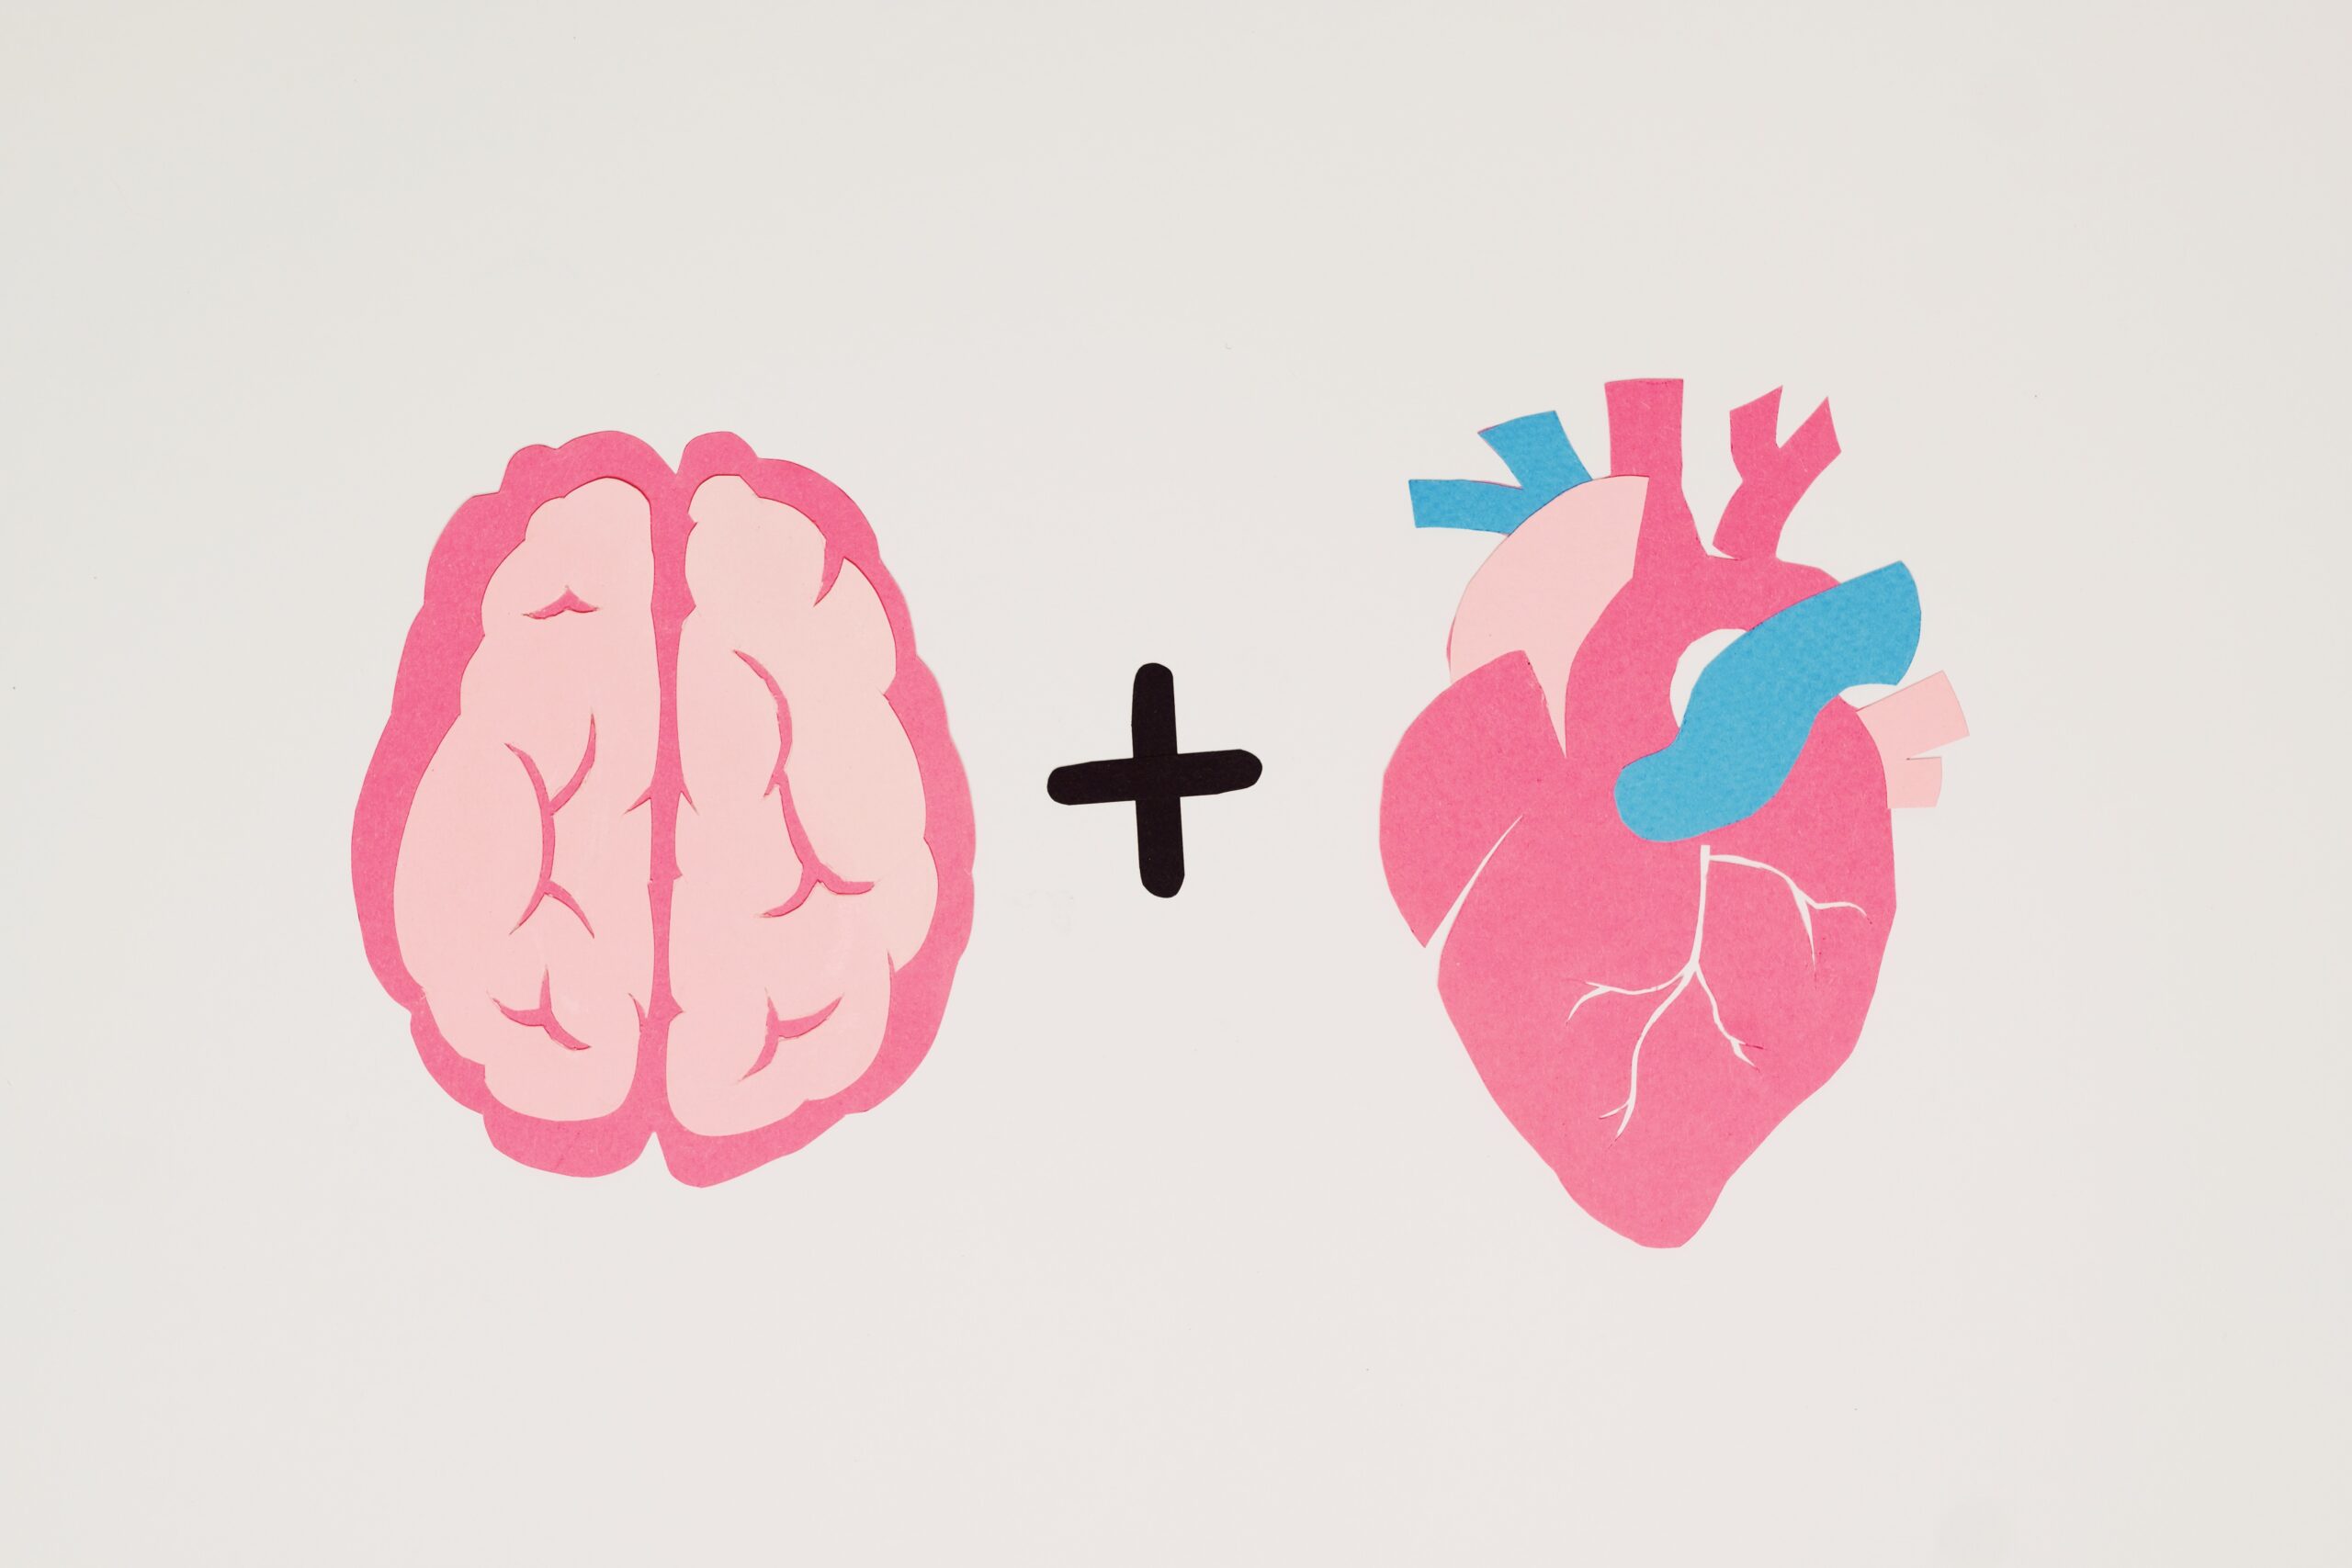 brain plus heart equation